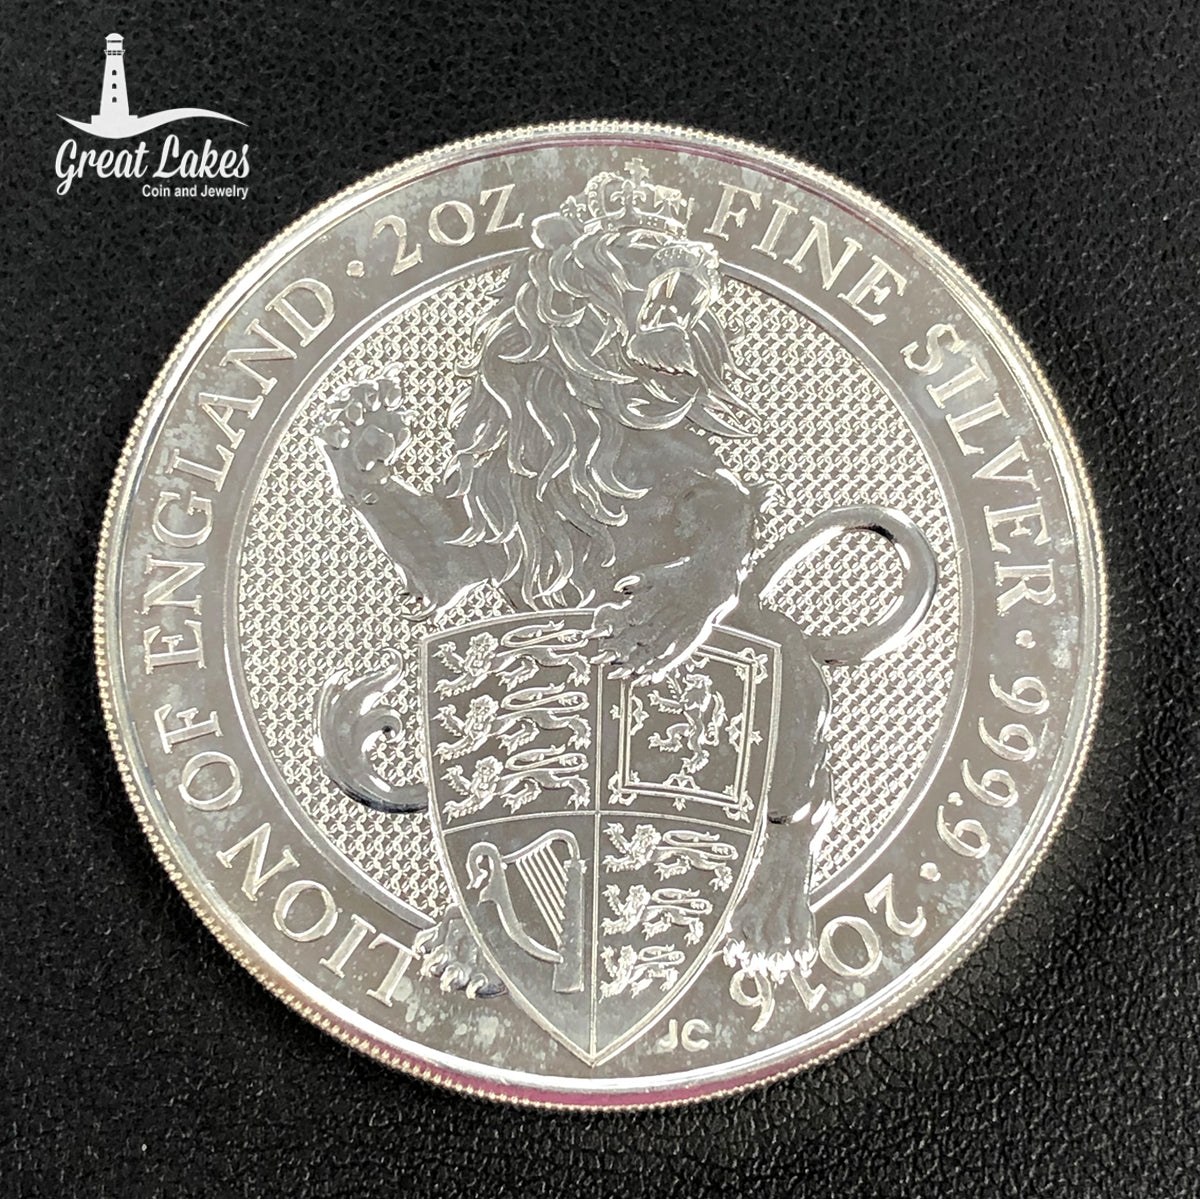 British 2016 2 oz Silver Lion of England (Off Quality)